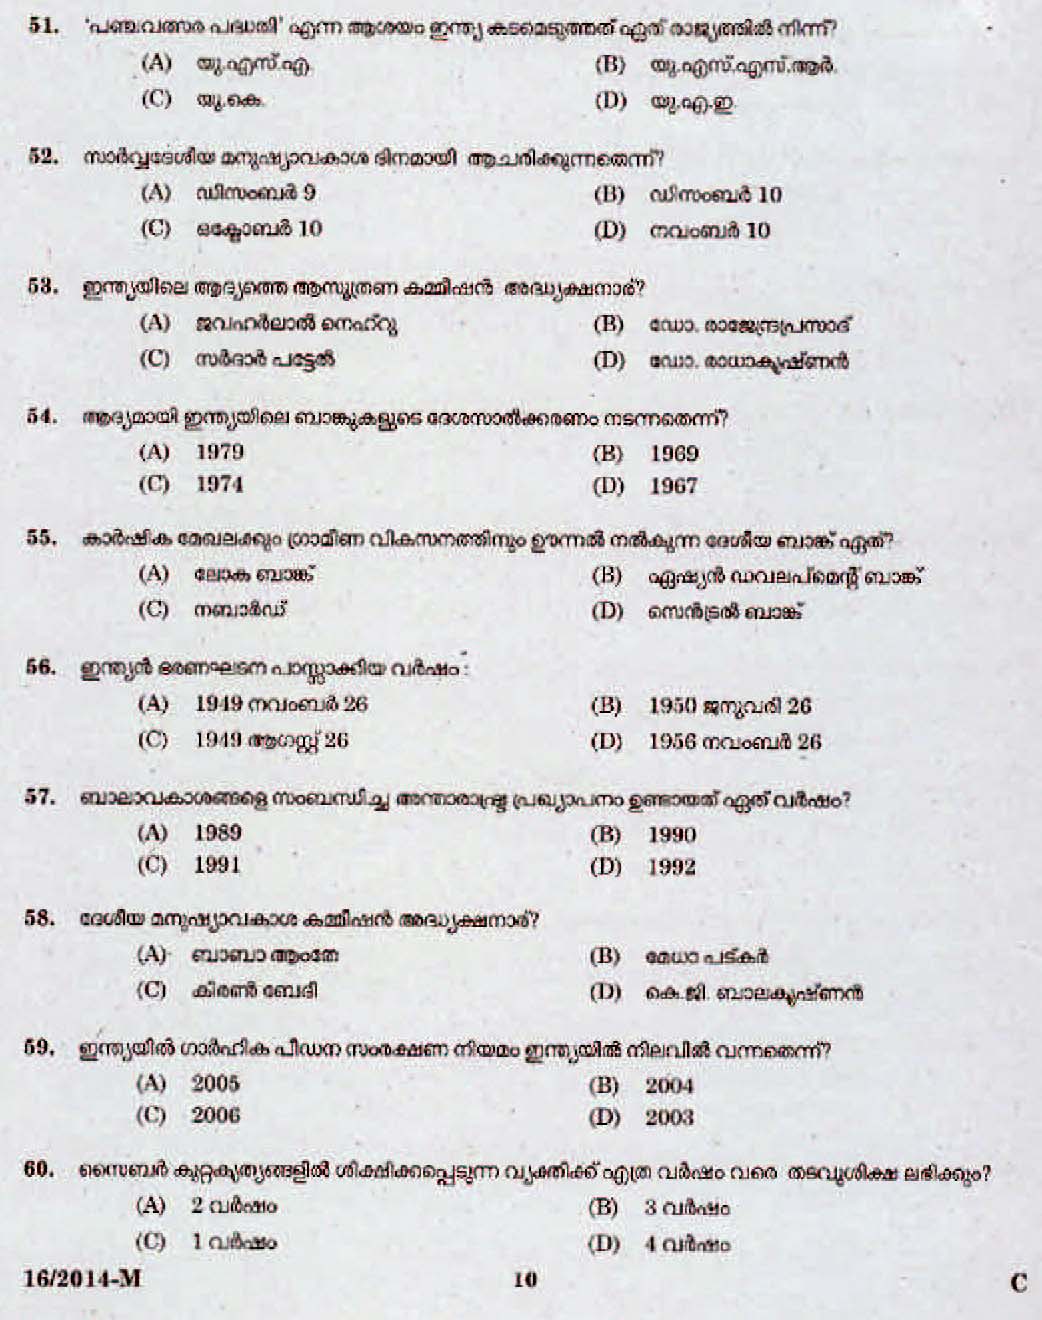 LD Clerk Kottayam Question Paper Malayalam 2014 Paper Code 162014 M 9